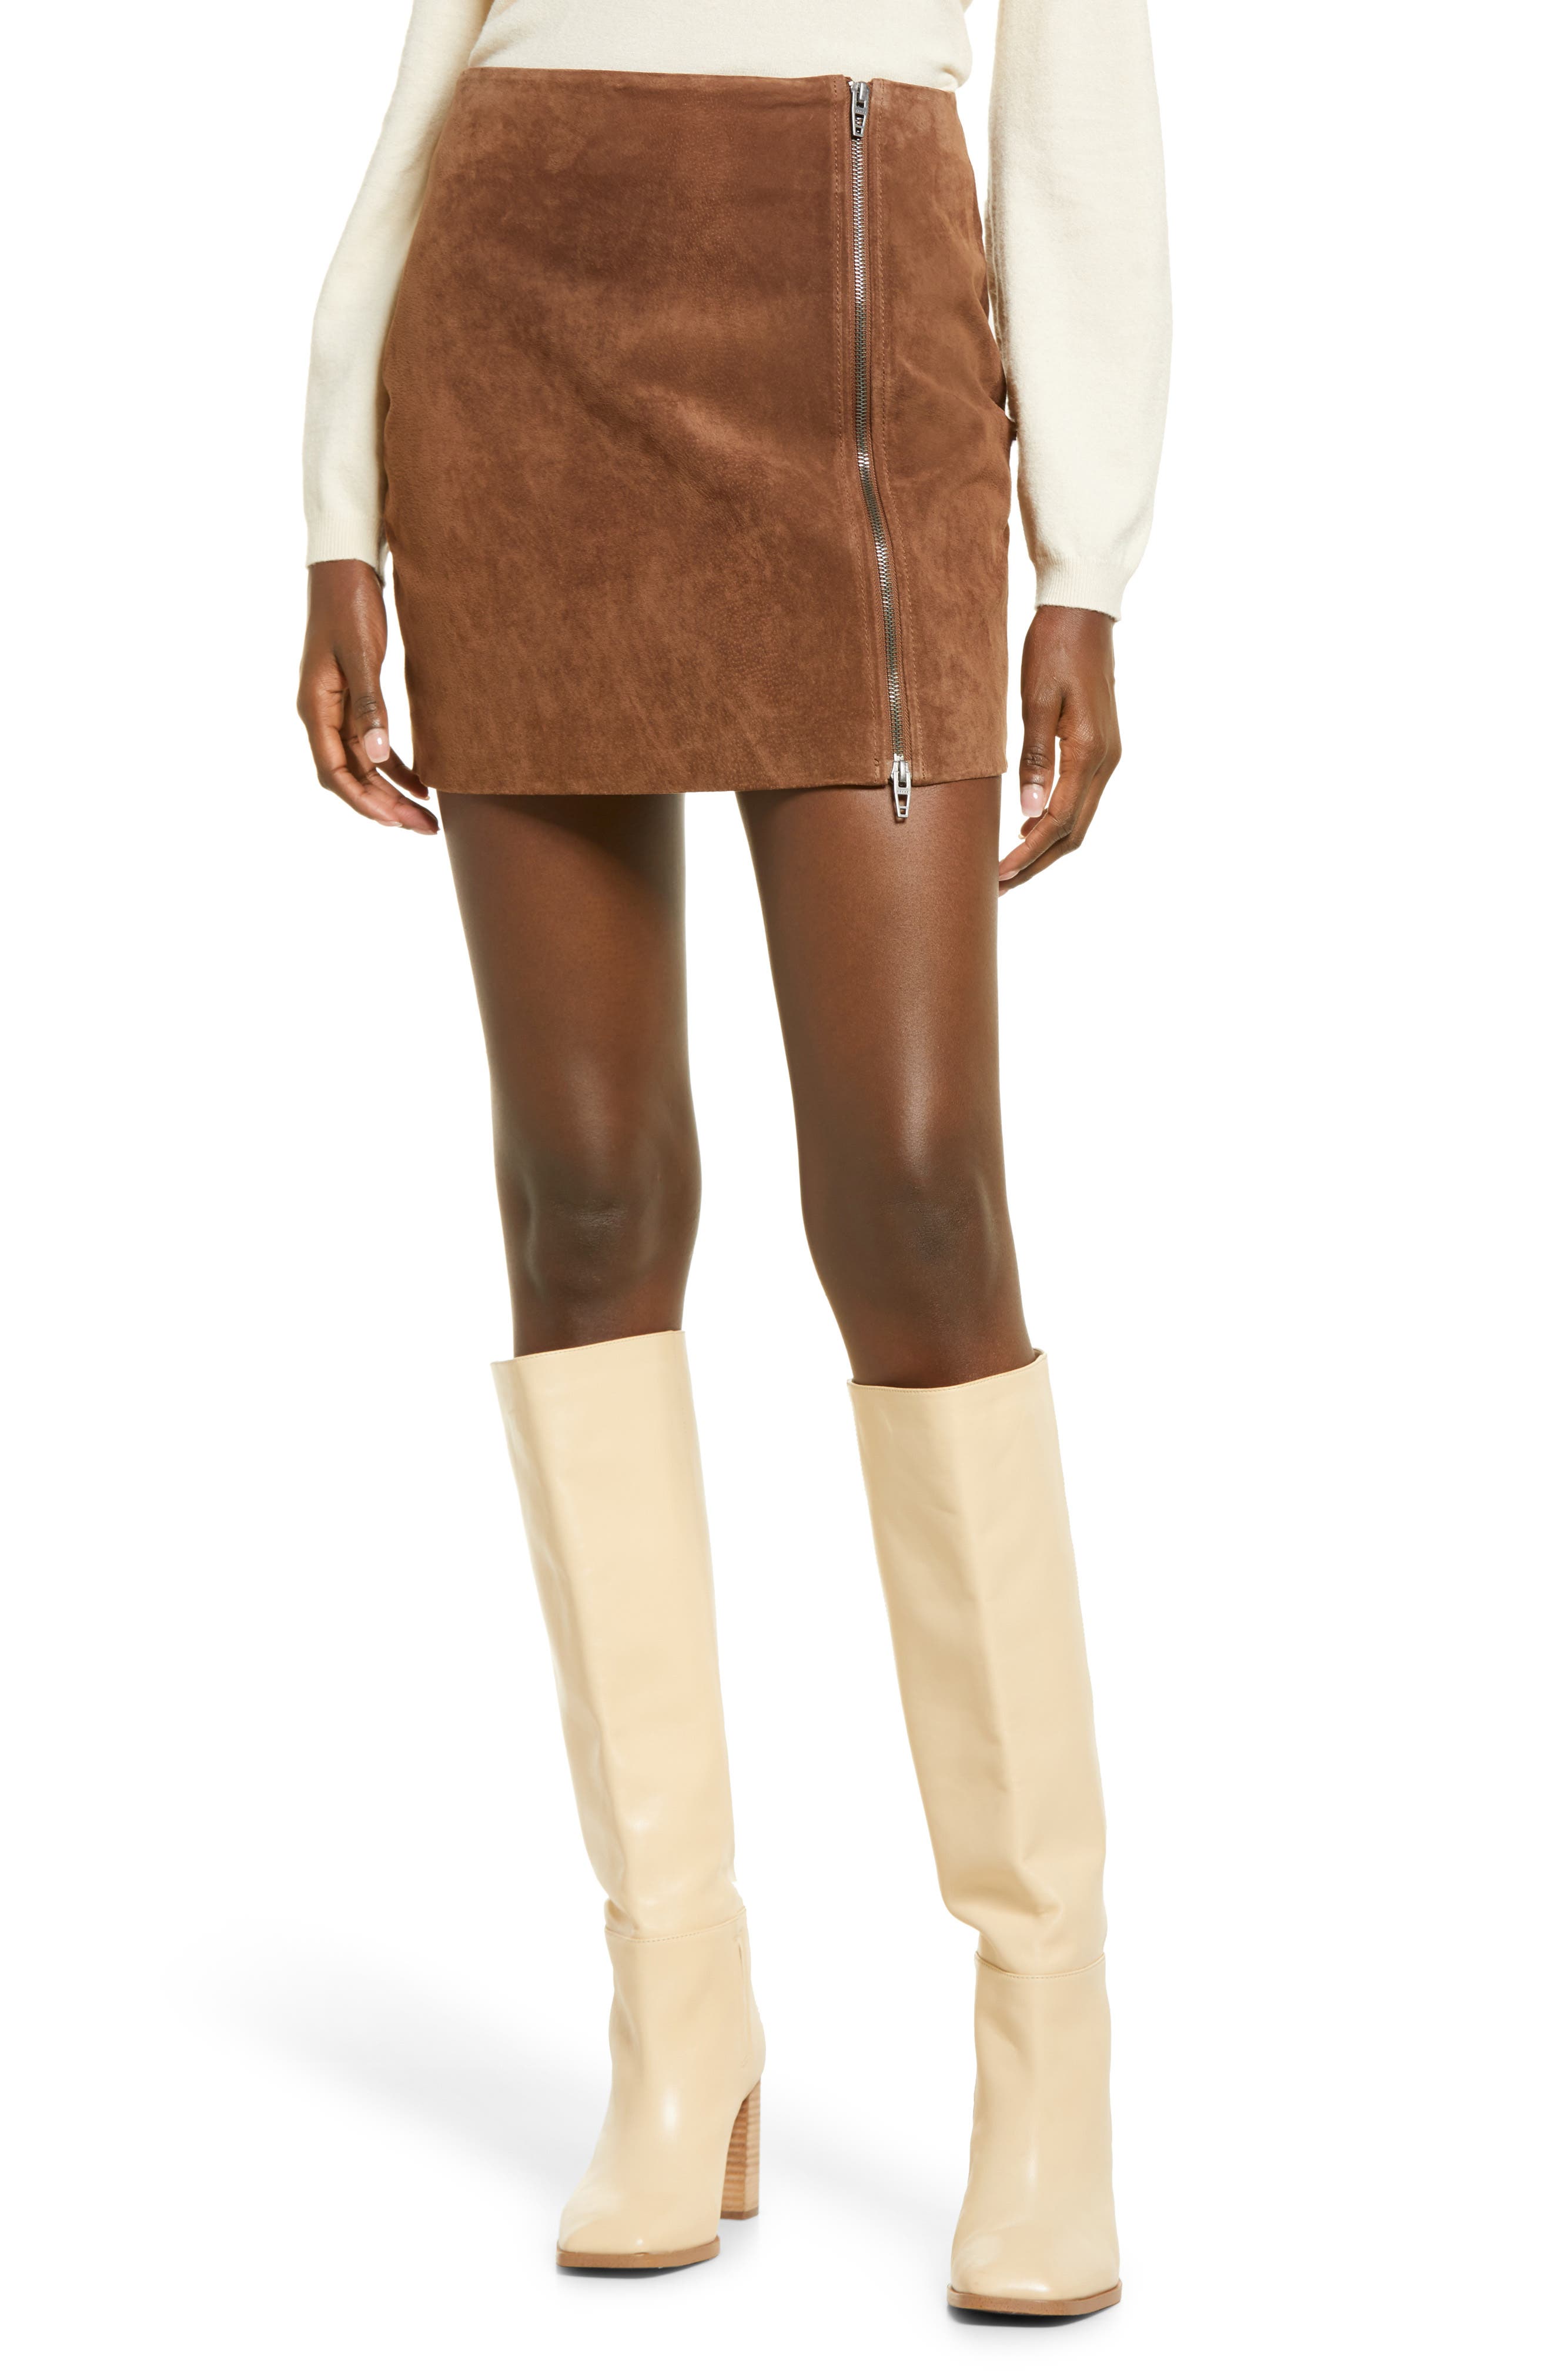 brown skirt and top